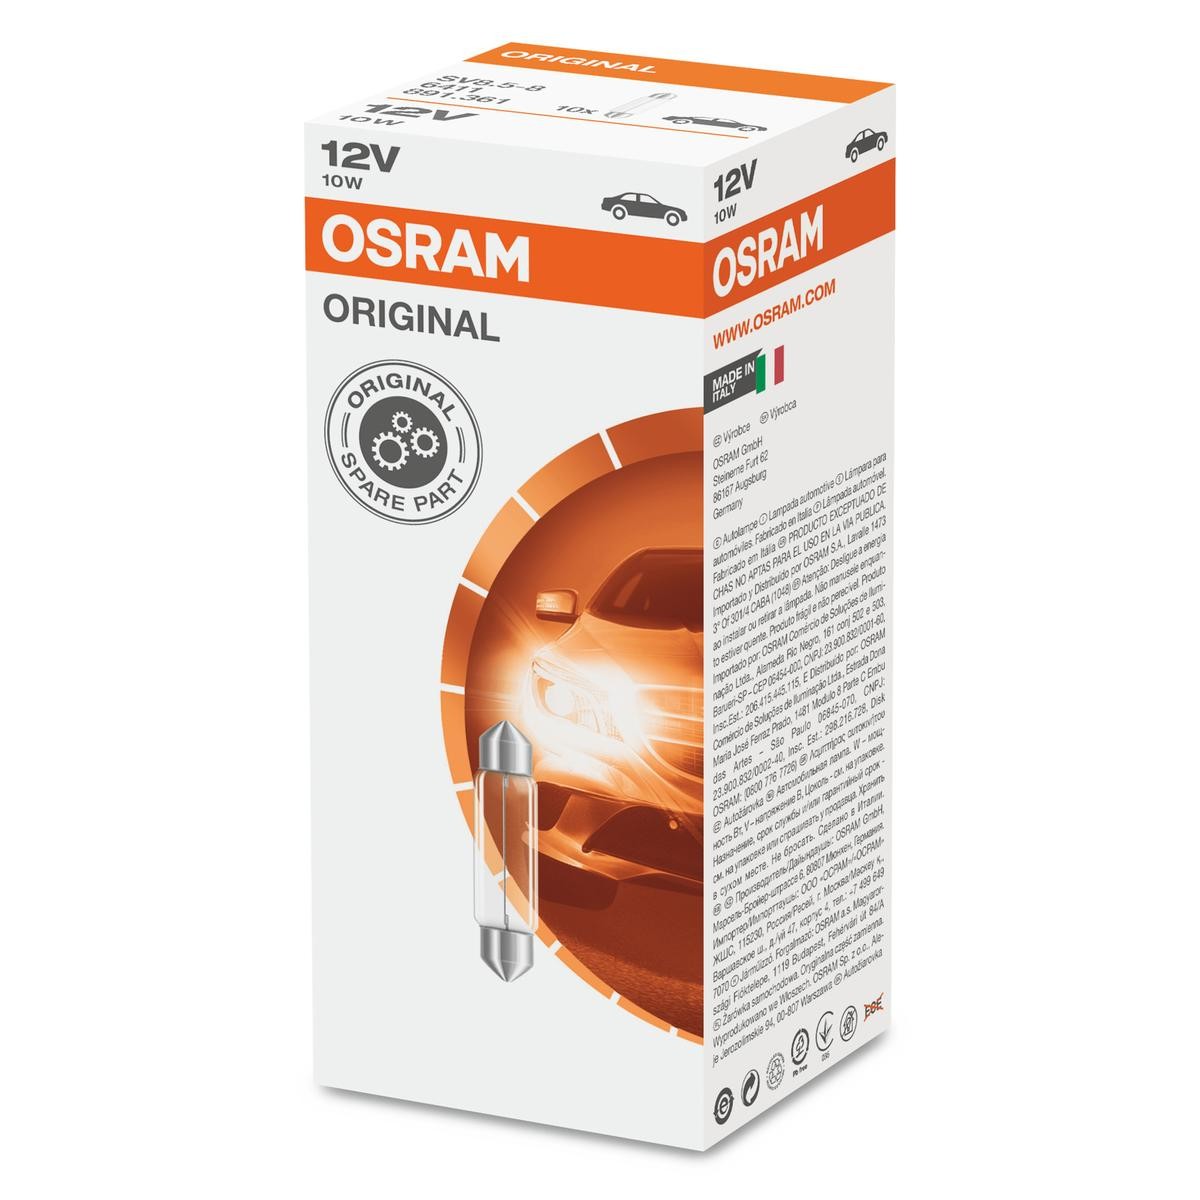 OSRAM 6411 Lighting controls MERCEDES-BENZ CLS 2004 price